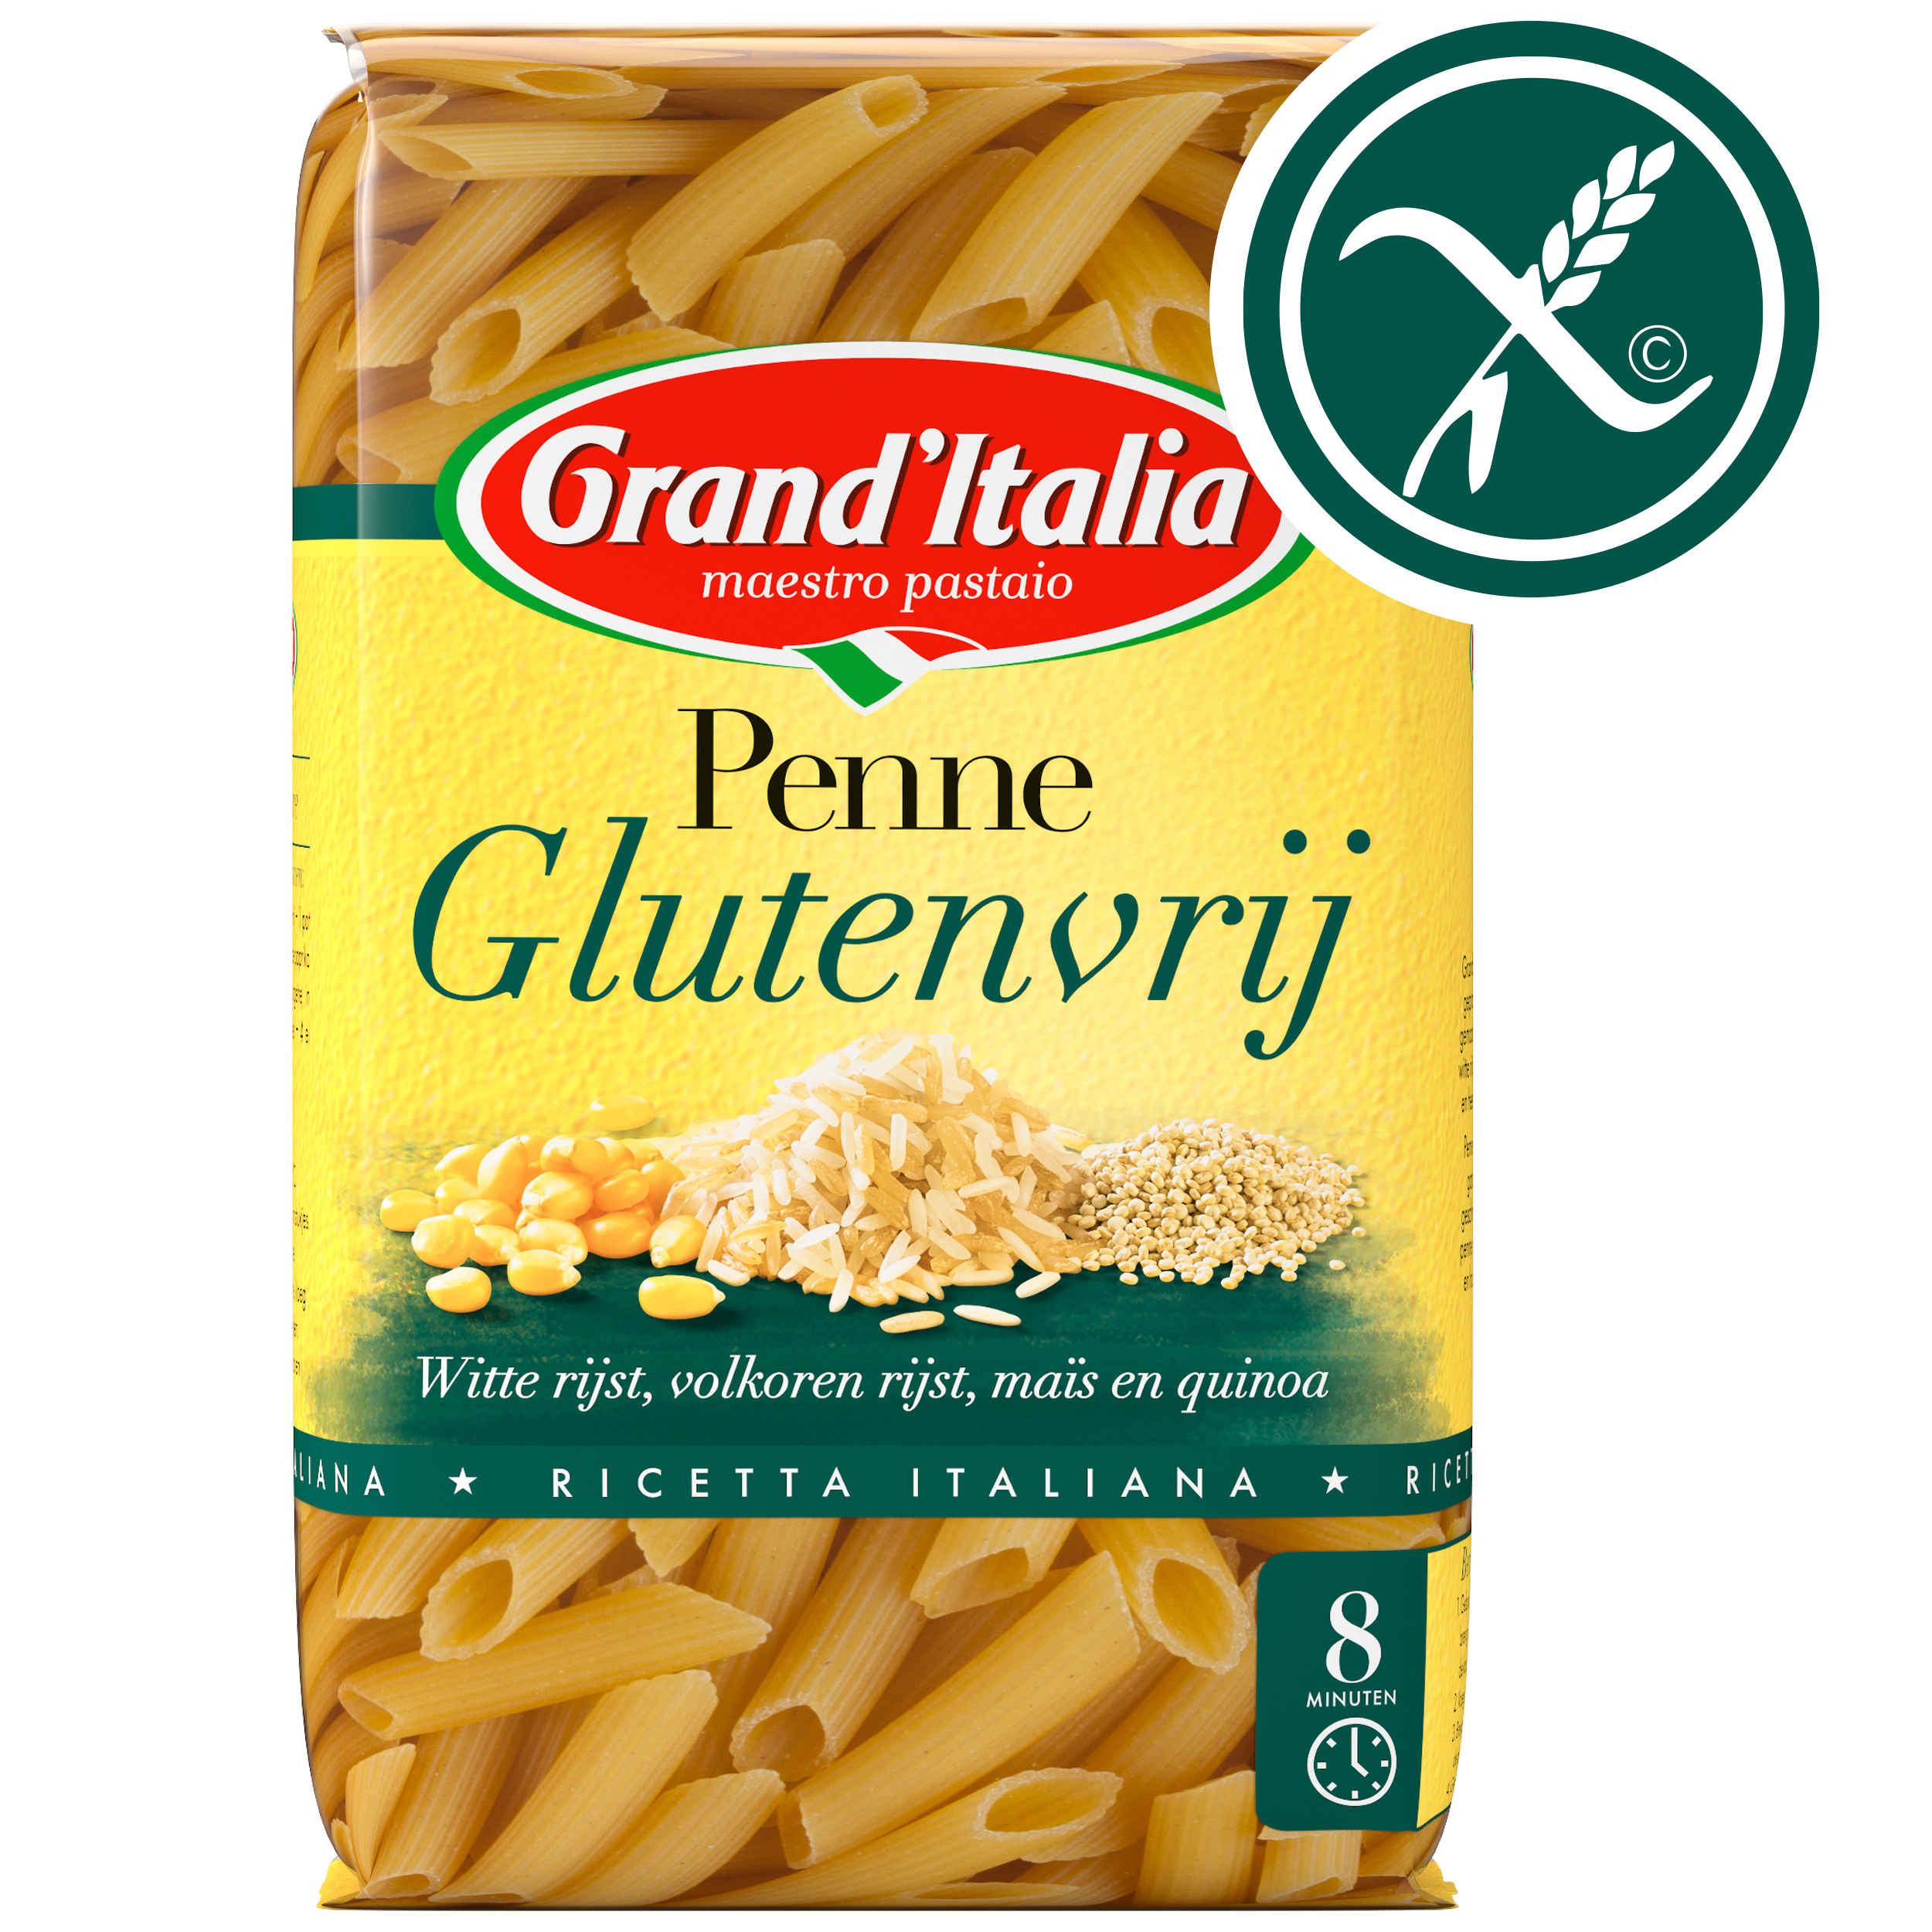 Pasta Penne Glutenvrij 400g claim Grand'Italia